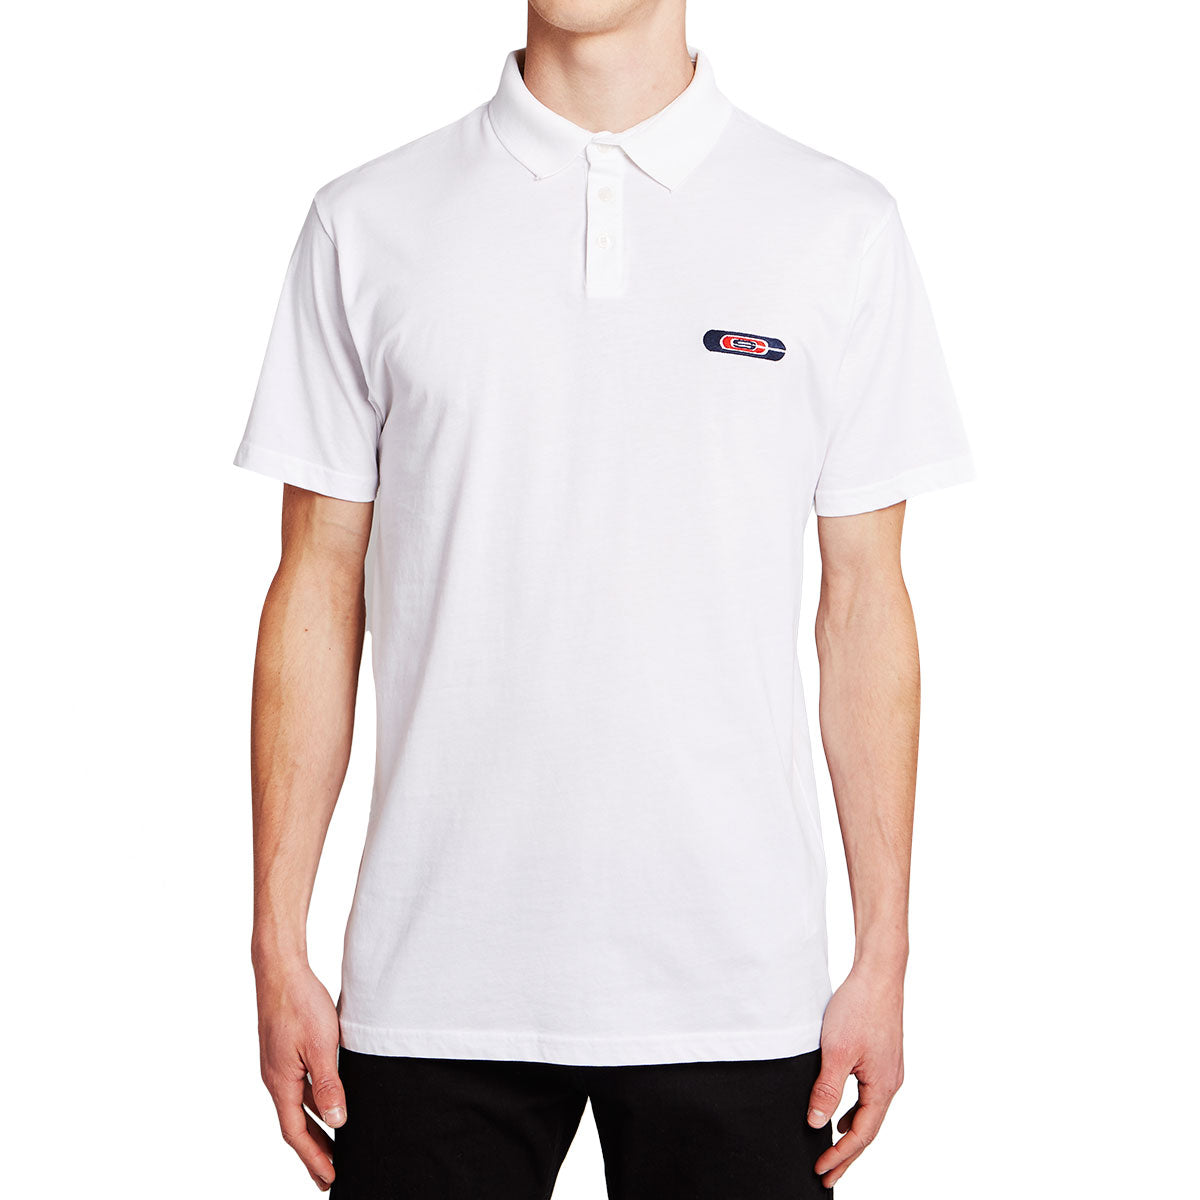 CCS Nested Polo Shirt - White image 1